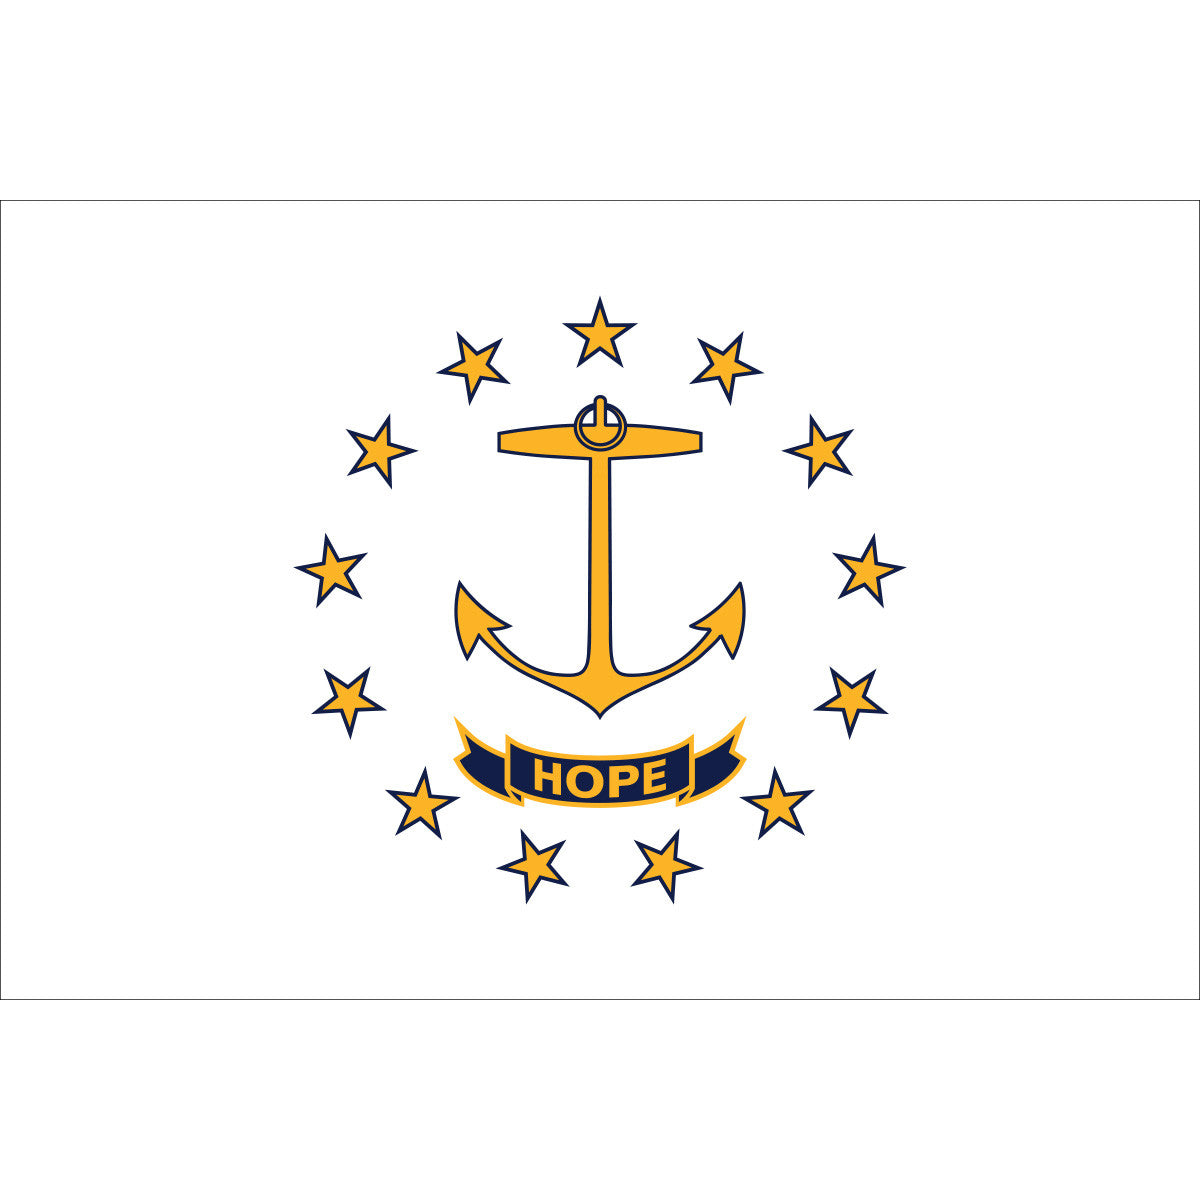 Rhode Island State Flags